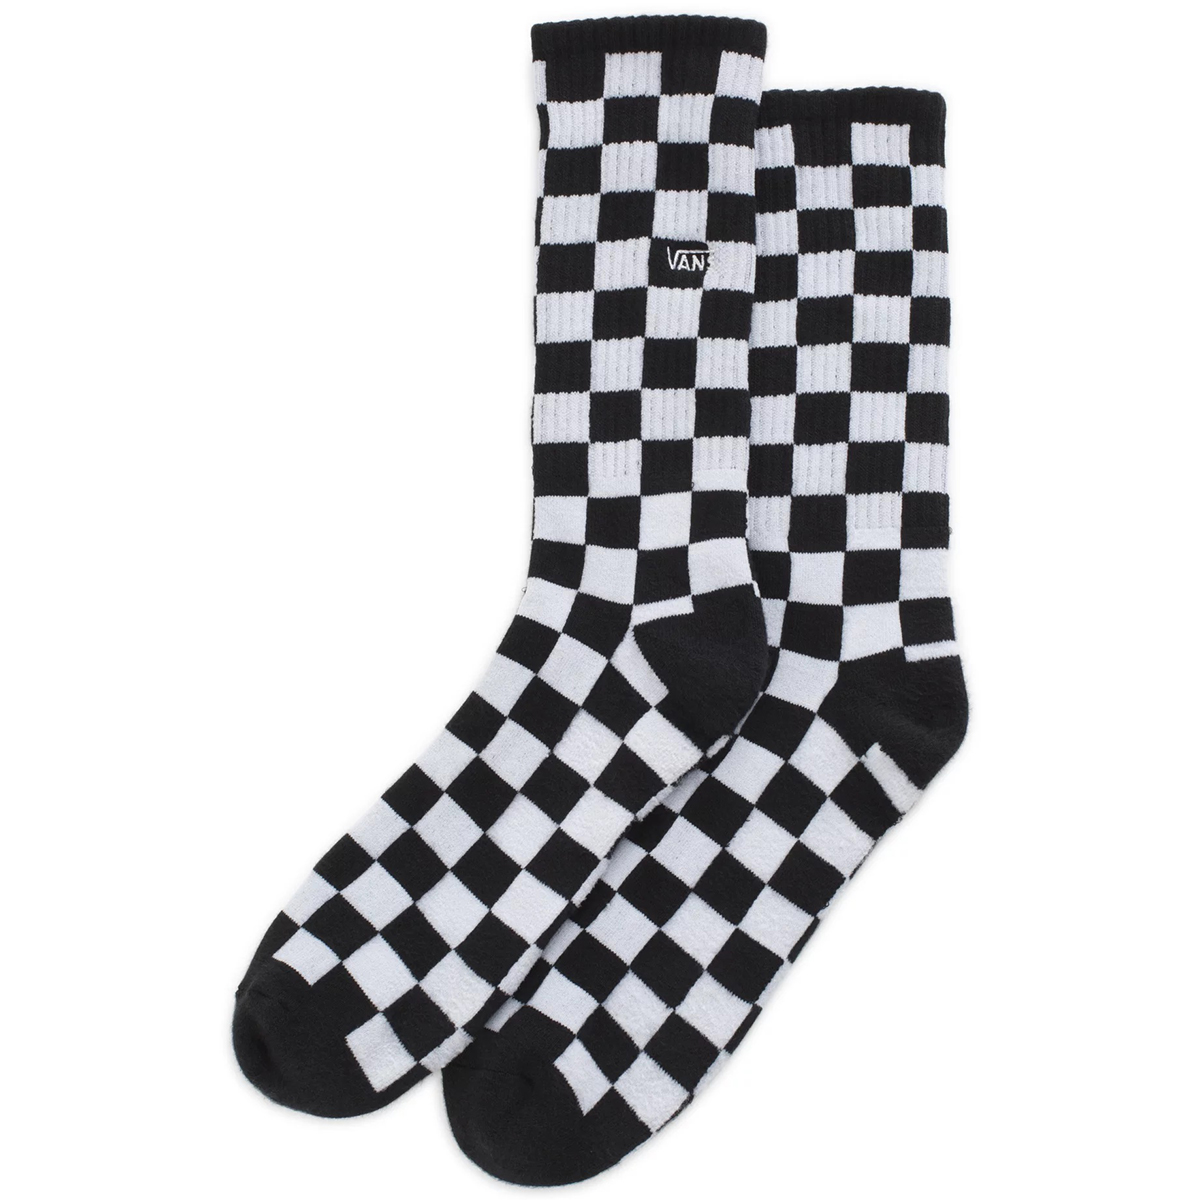 Vans Guys' Checkerboard Crew Socks (Sizes 9.5-13)